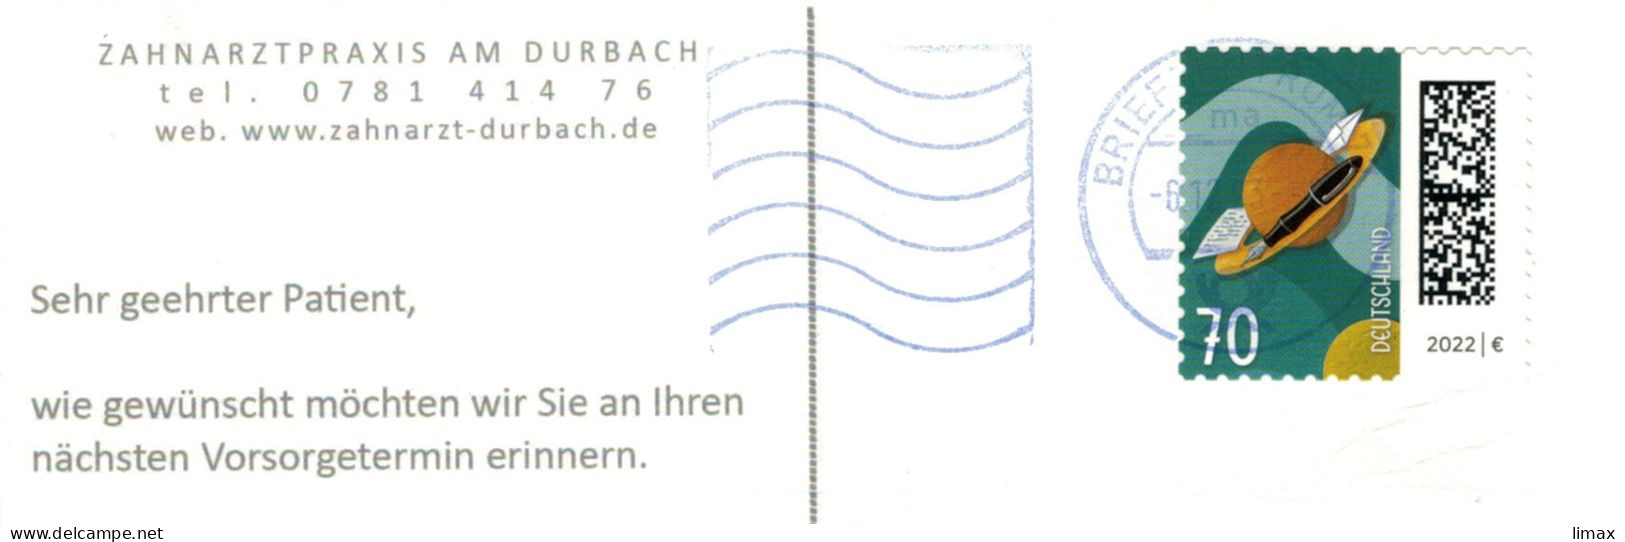 Zahnarztpraxis Am Durbach - Planetenring Saturn Füllfeder Matrix 2022 BZ - Covers & Documents